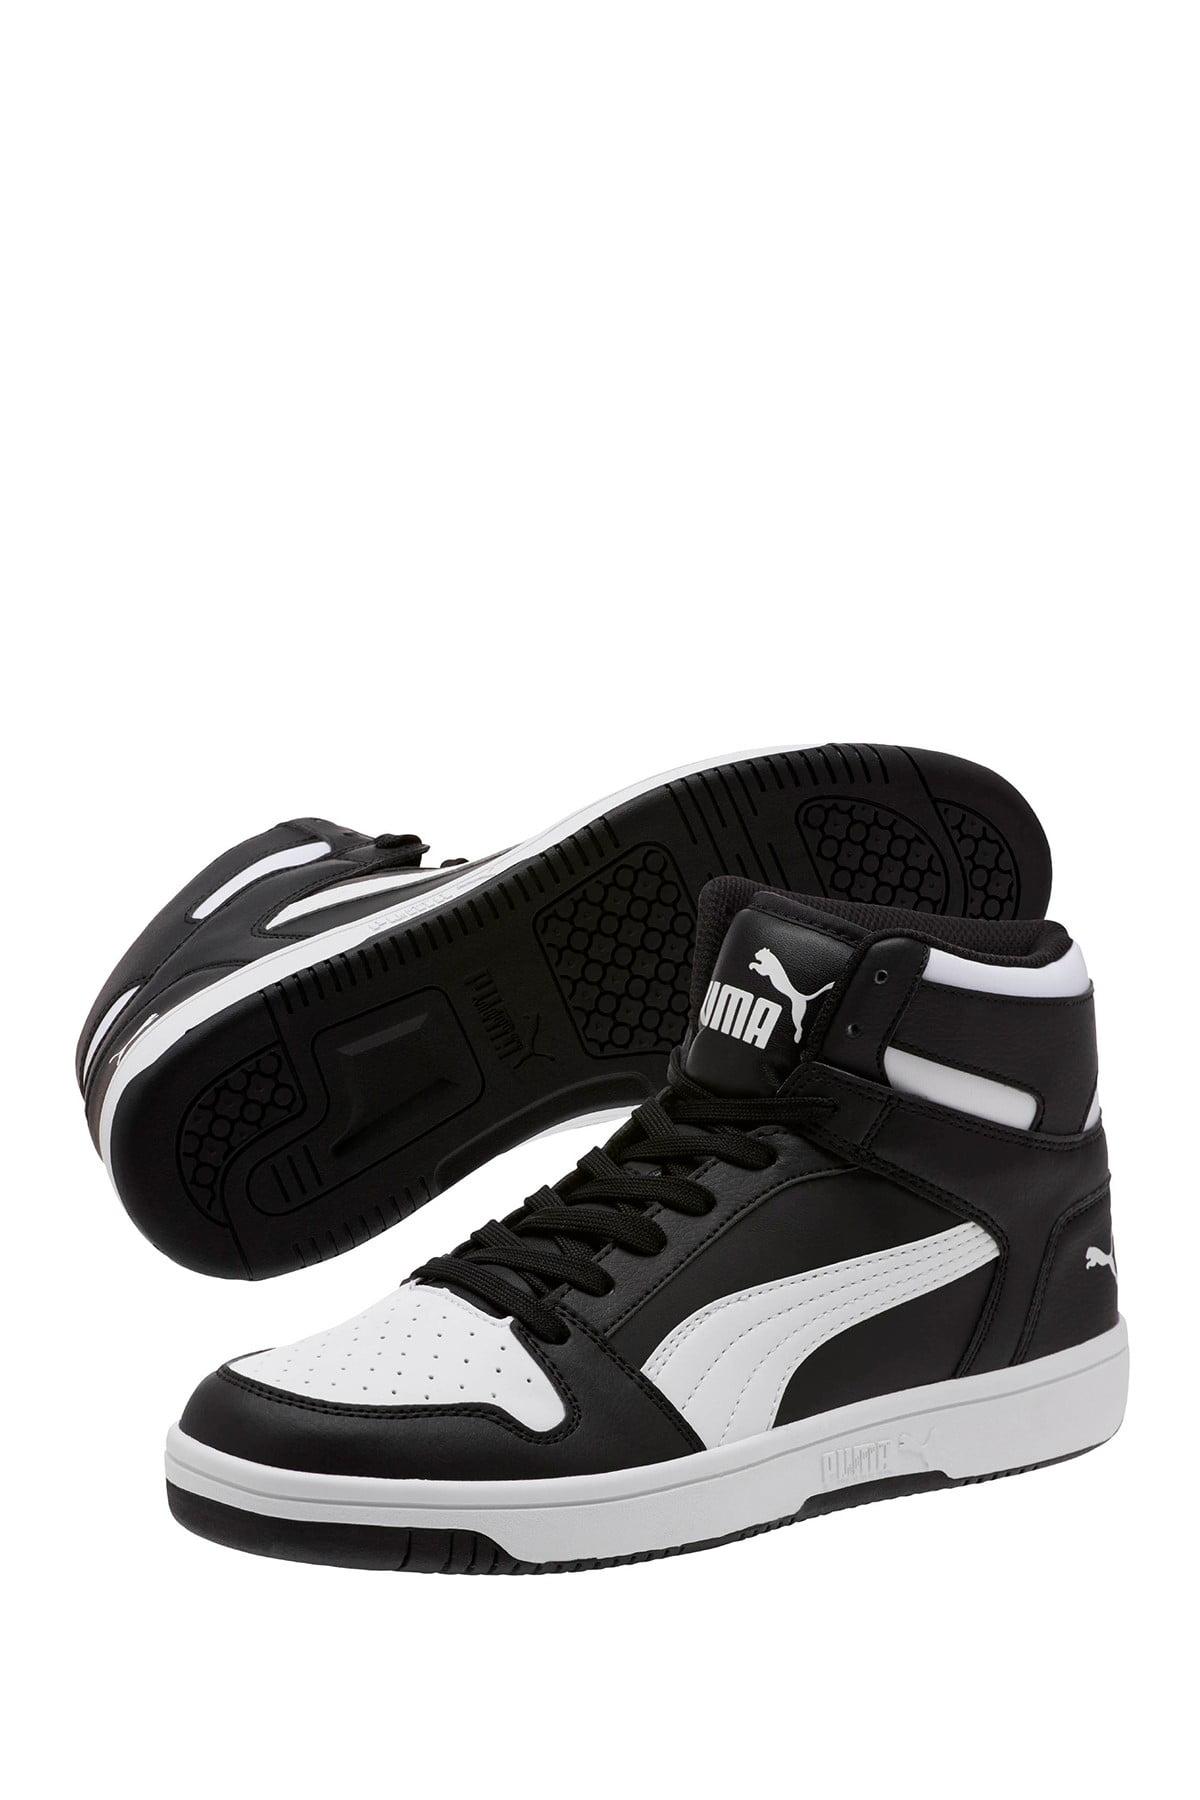 PUMA Rebound Layup Sneakers in Black/White (Black) for Men - Save 65% - Lyst